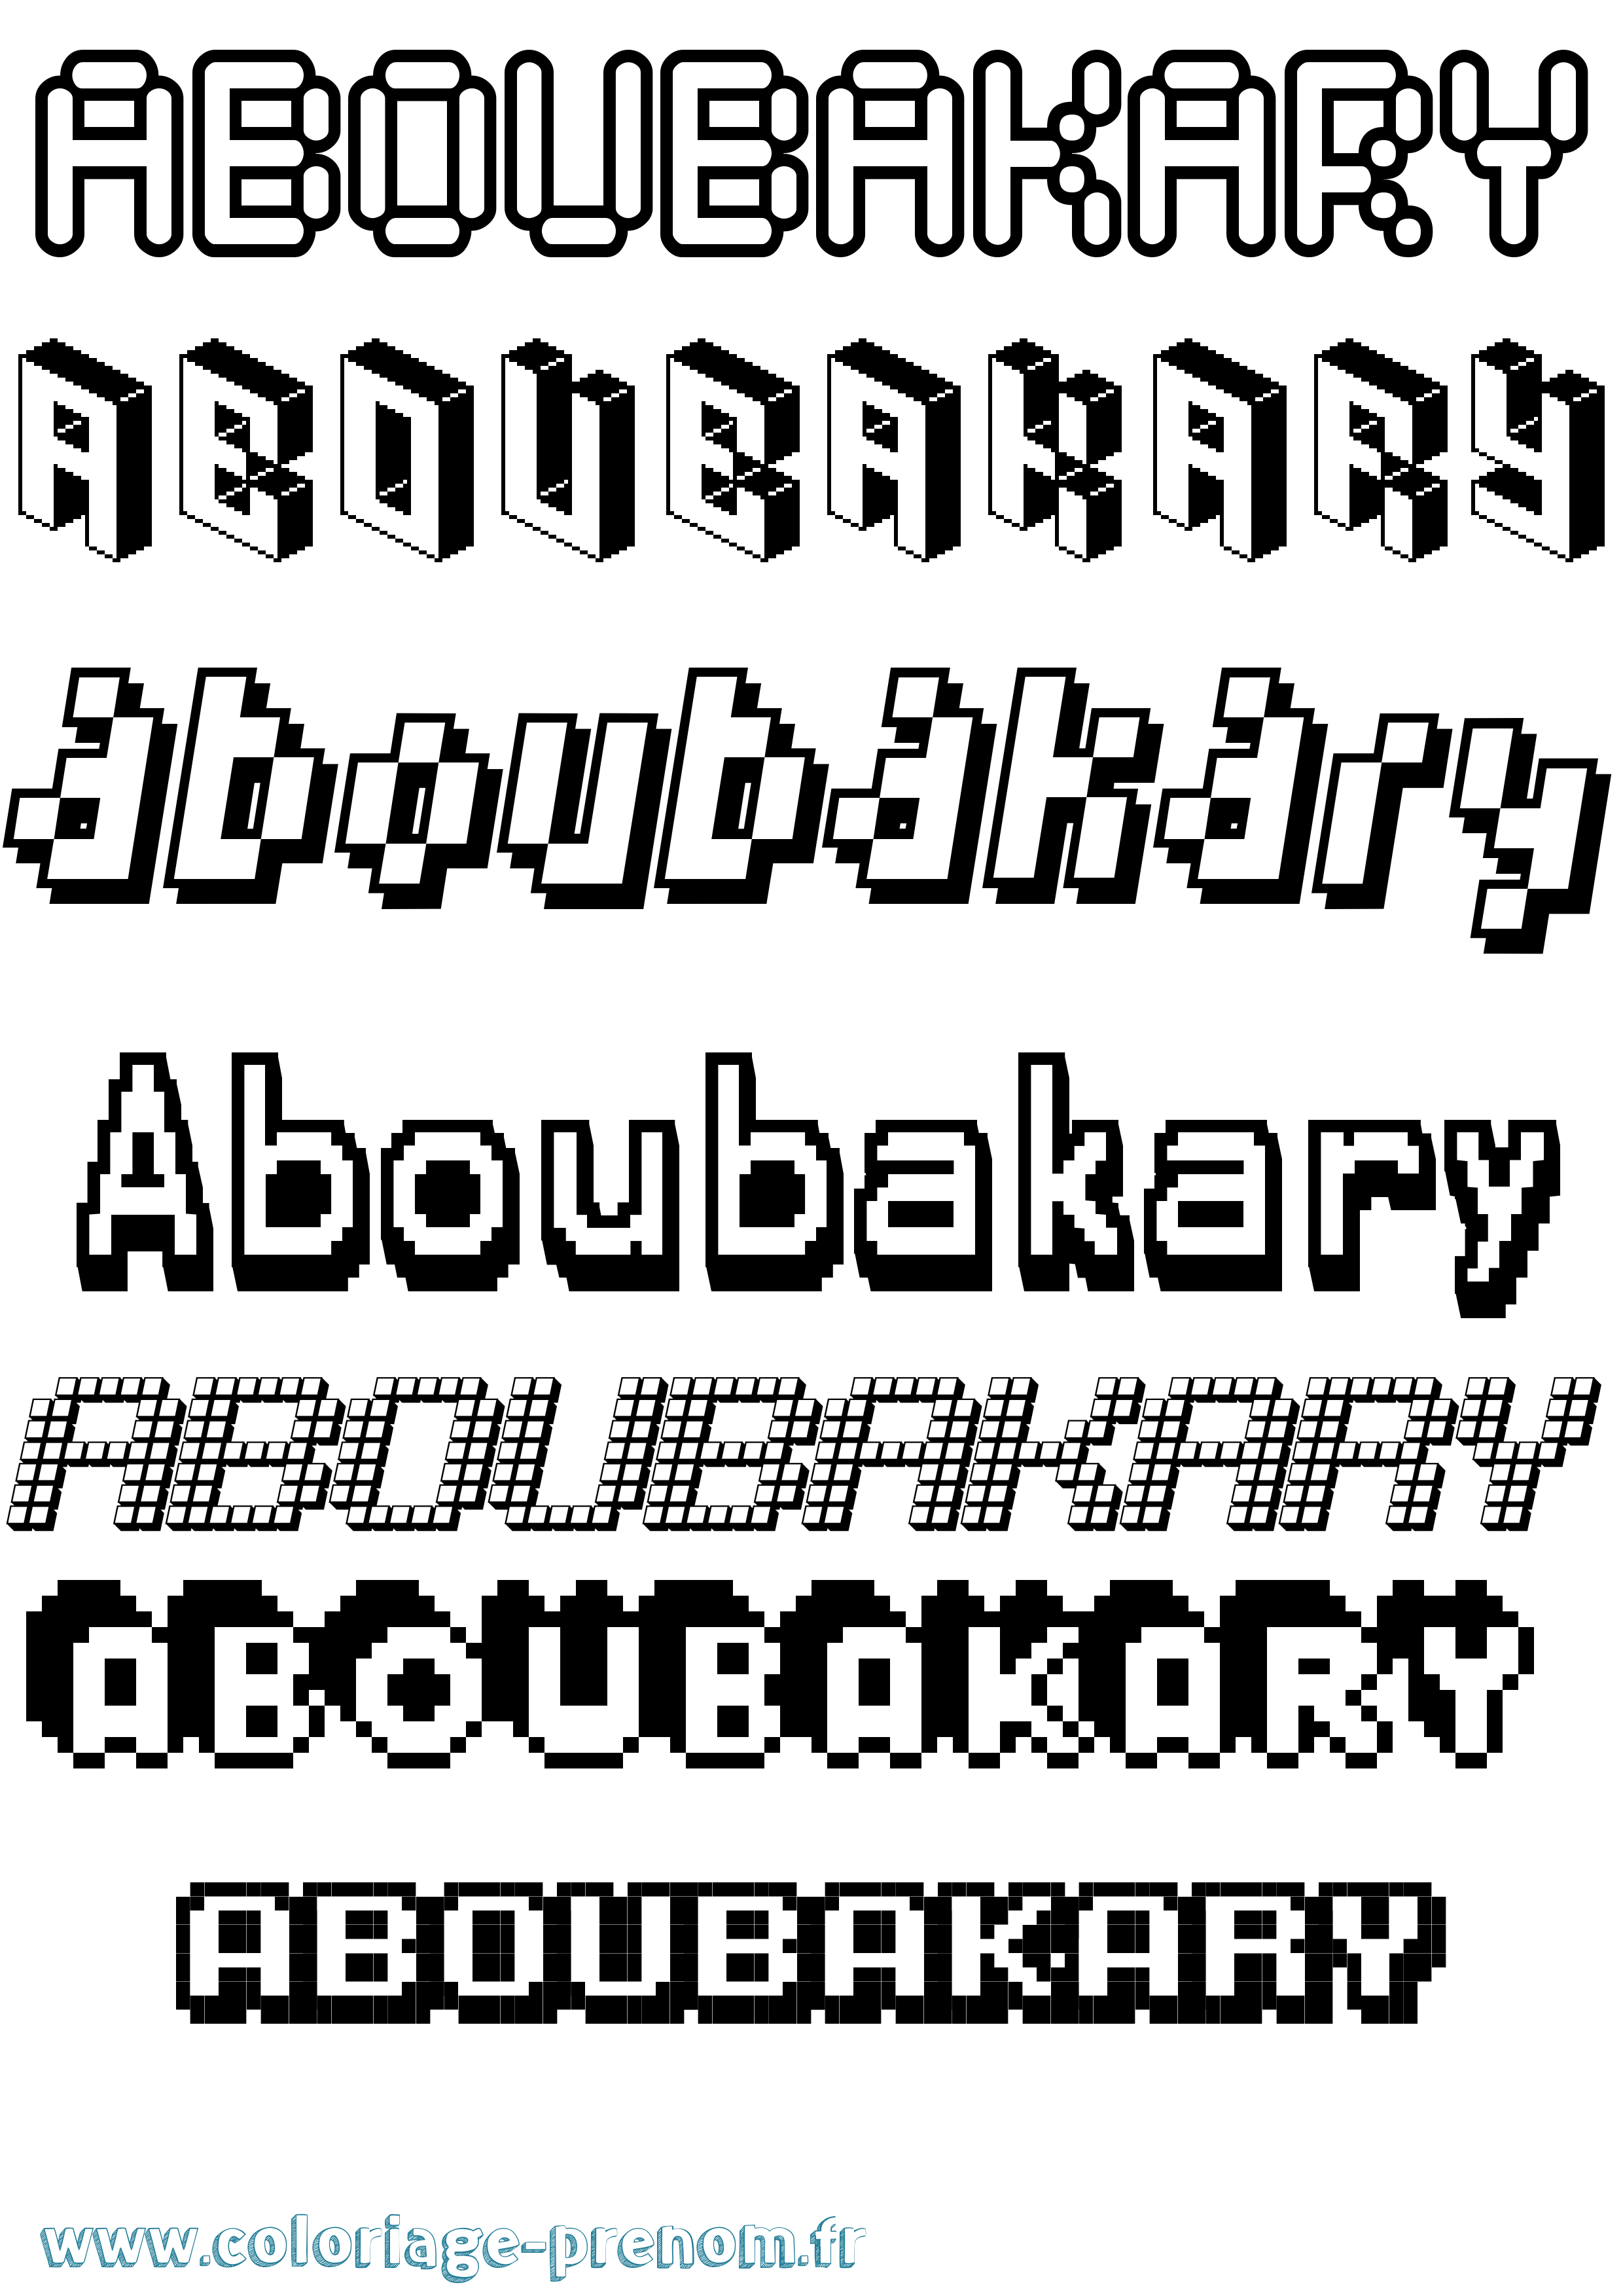 Coloriage prénom Aboubakary Pixel